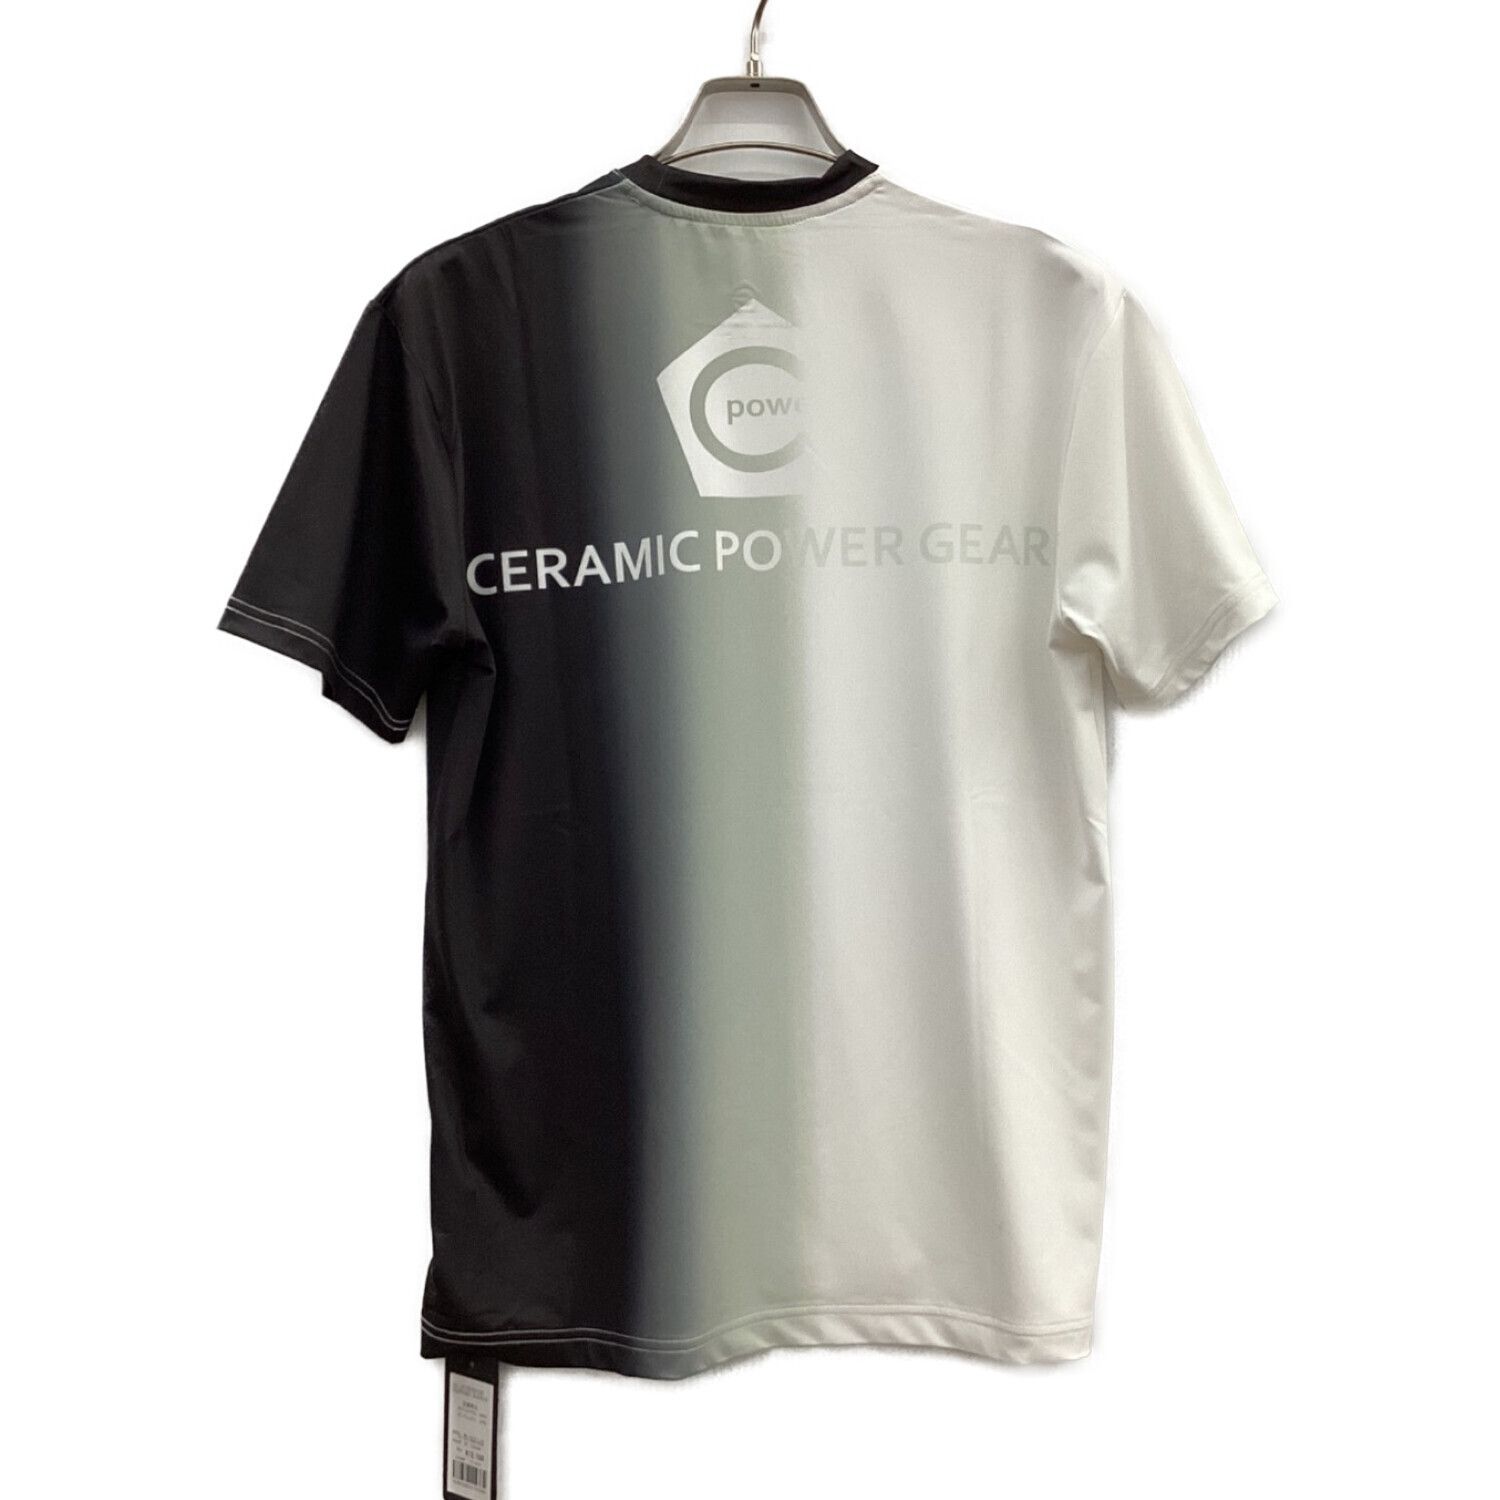 CERAMIC POWER GEAR (セラミックパワーギア) 野球用練習ウェア メンズ ...